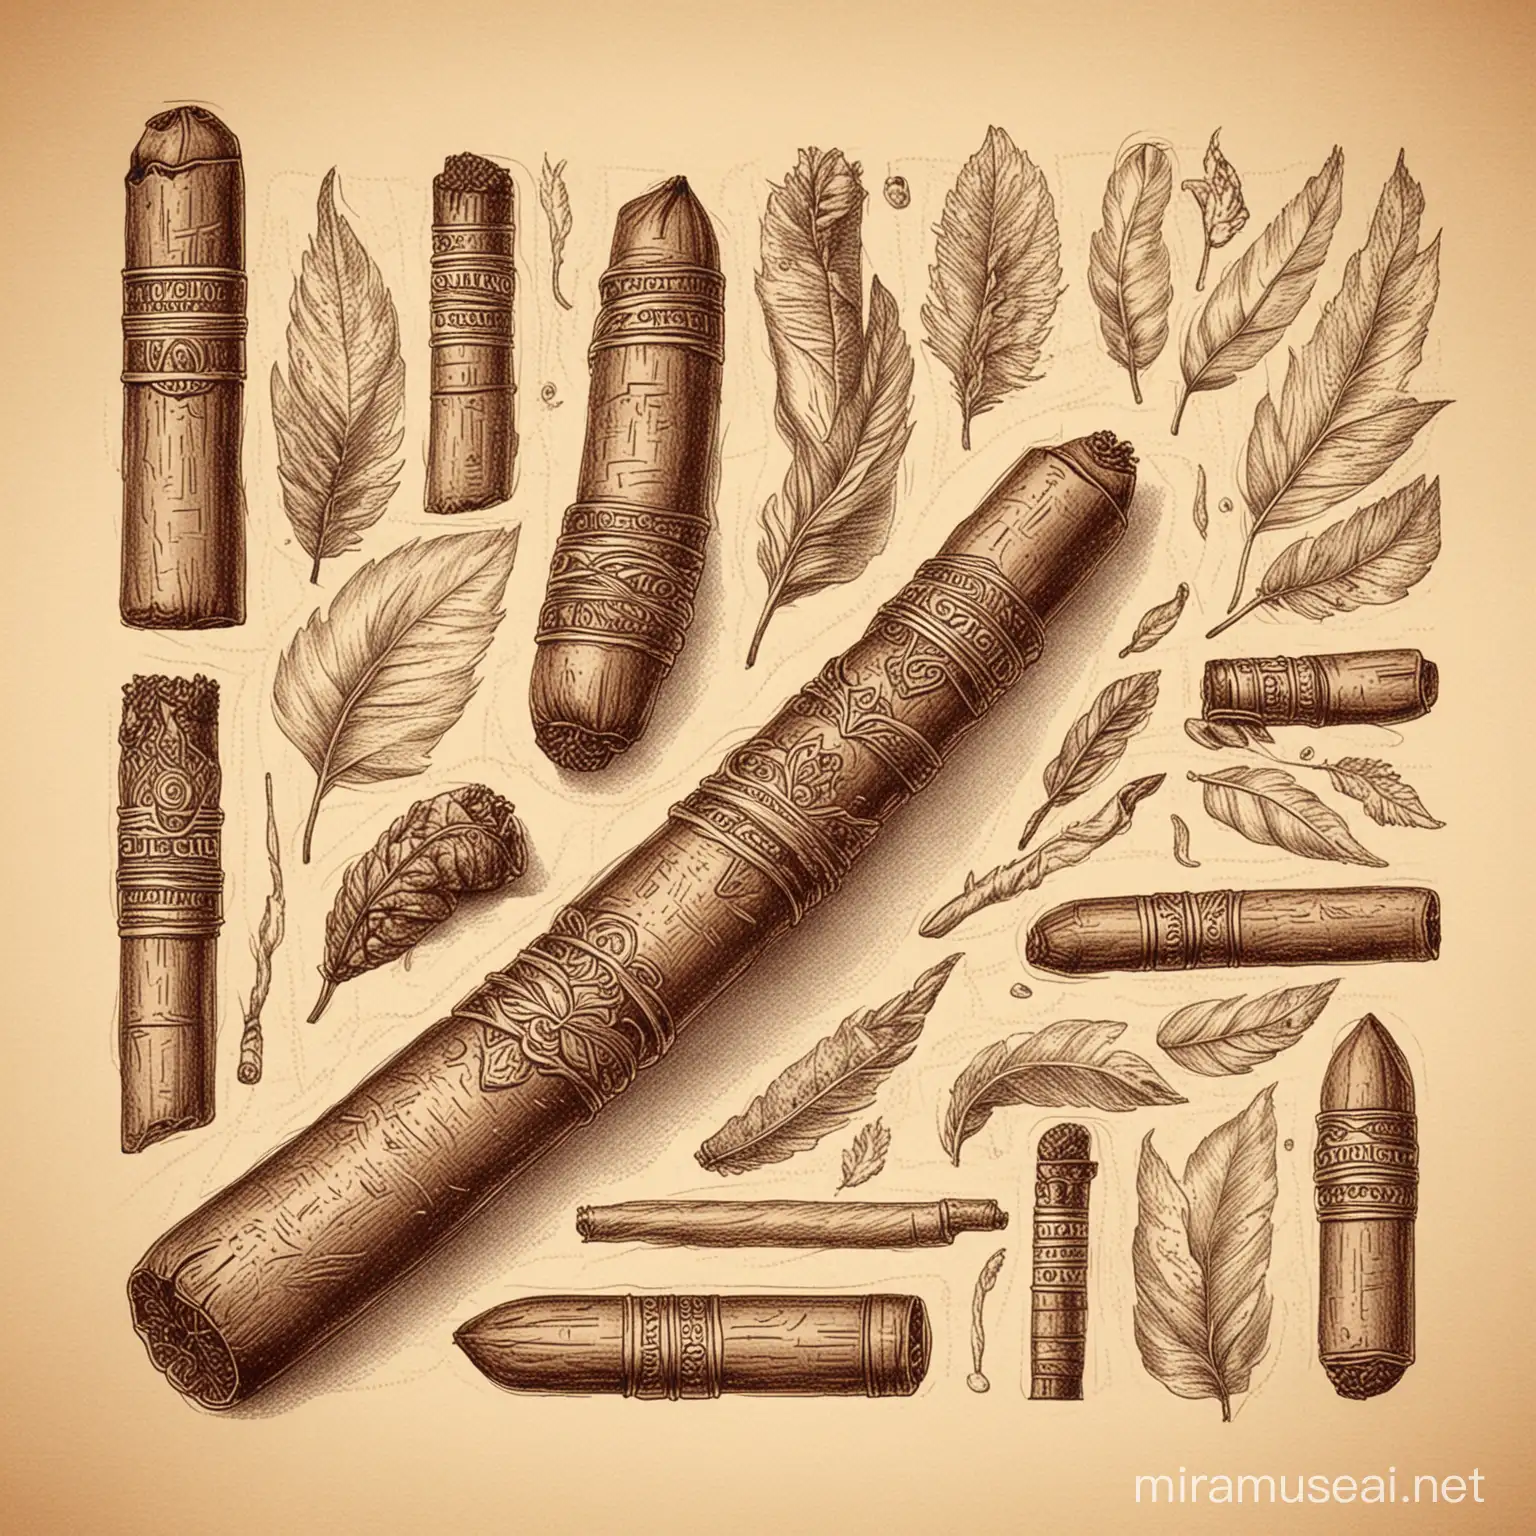 make lots of hand-drawn doodles illustrations of cigars